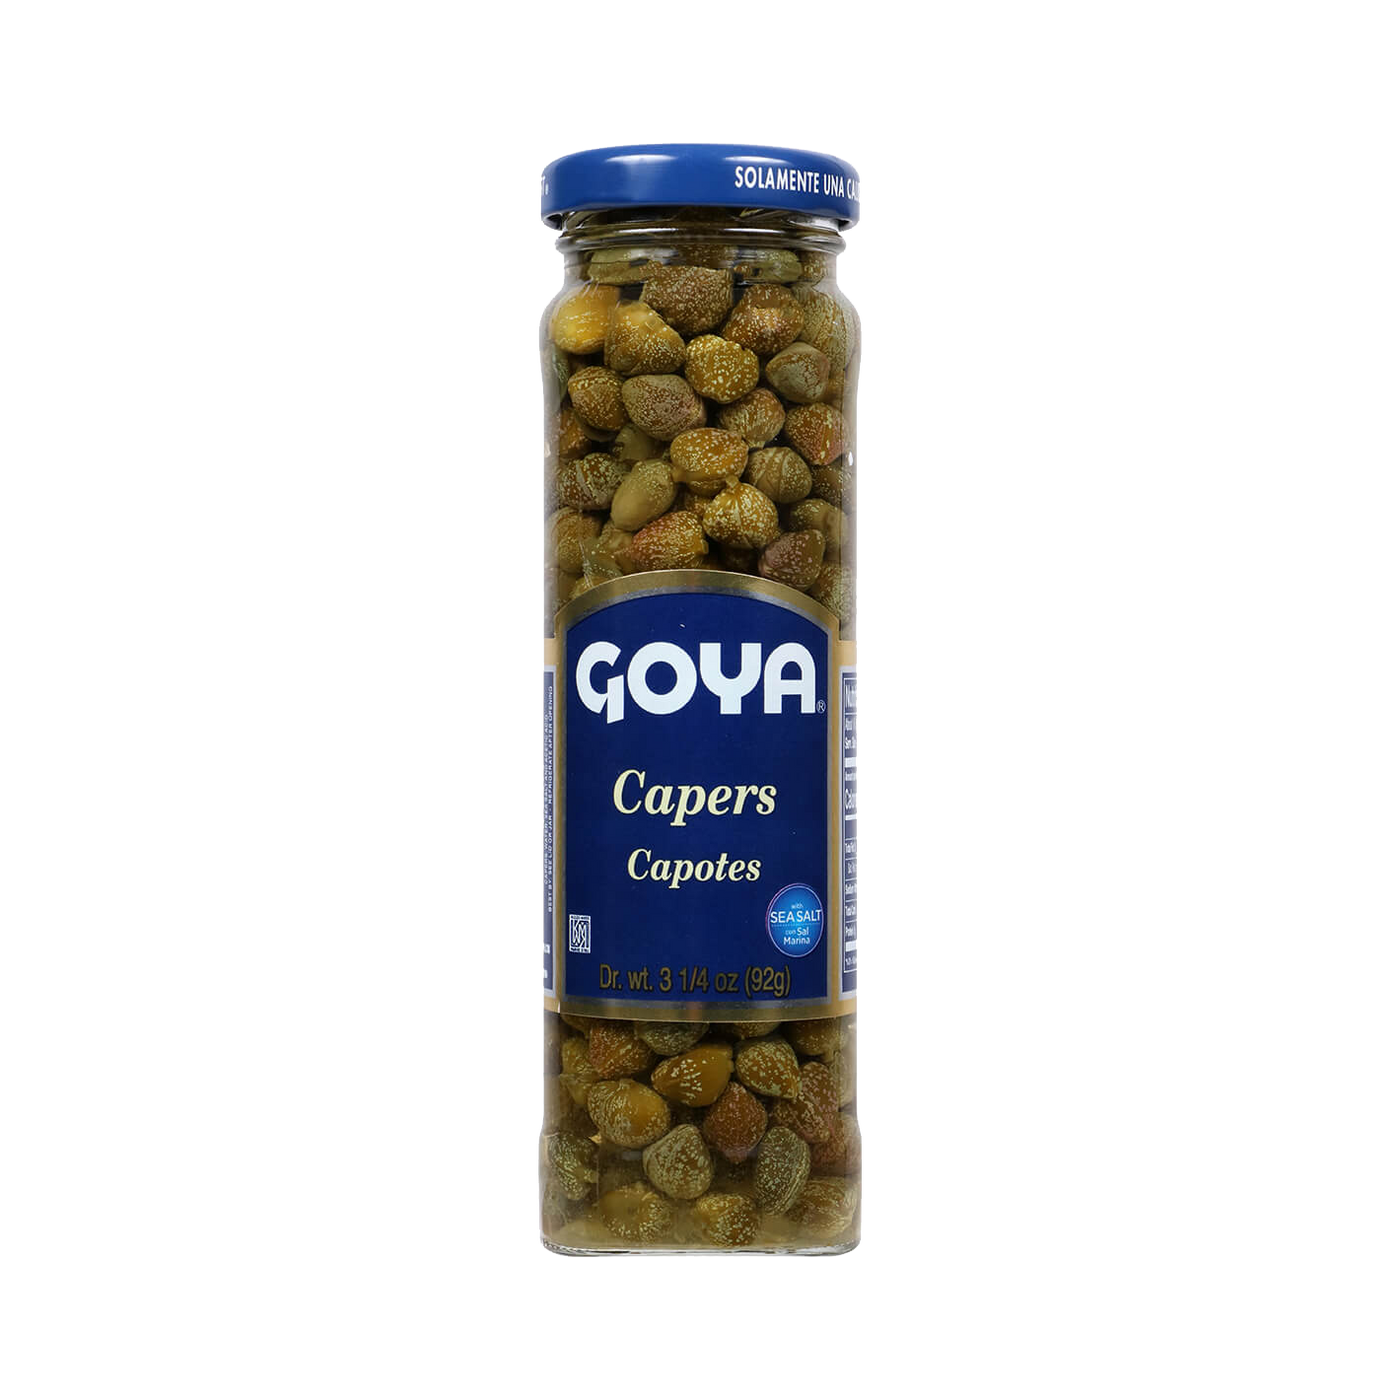   Goya Spanish Capers